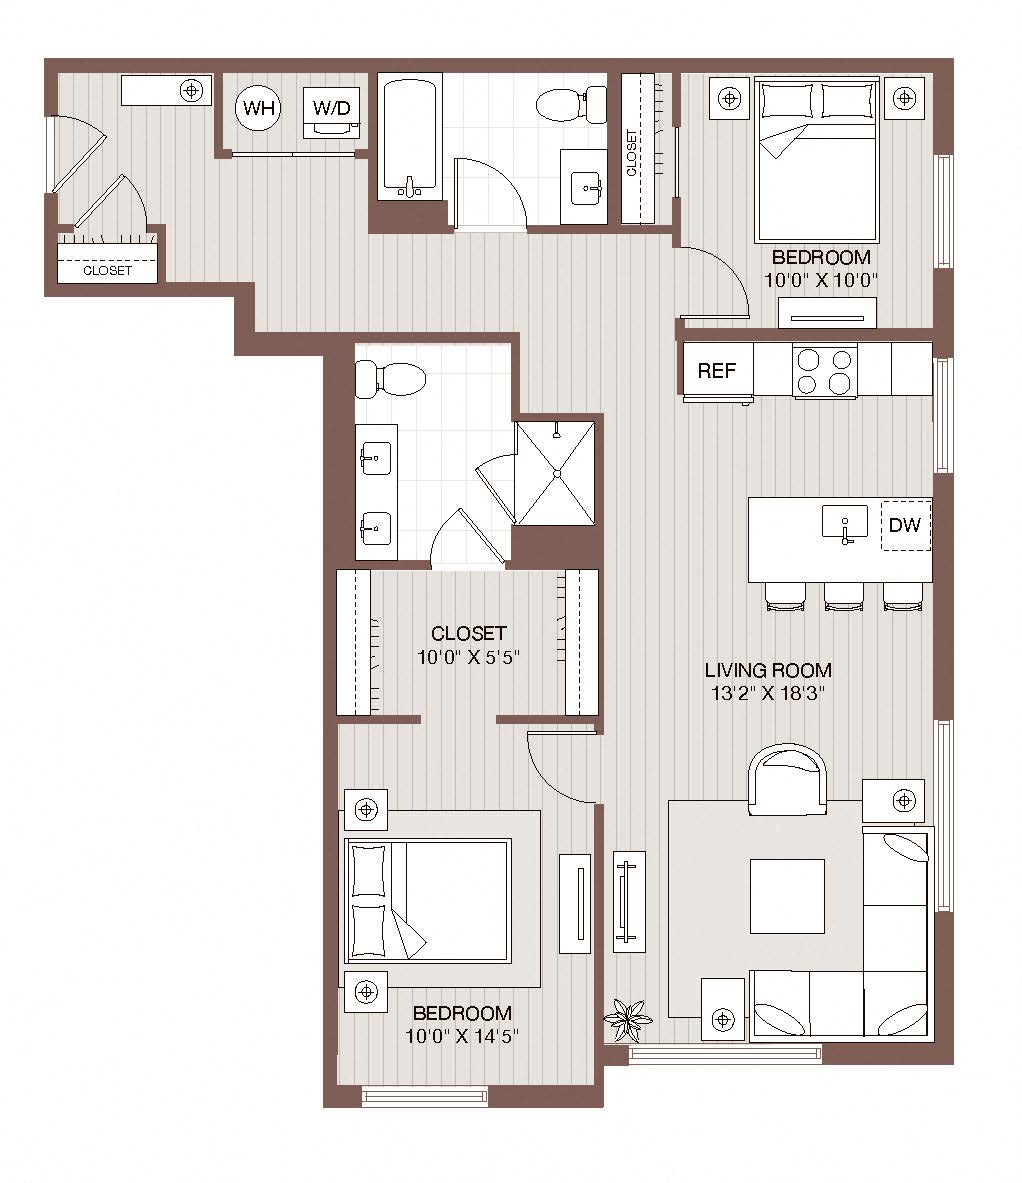 B7 – Lofts Floorplan Image